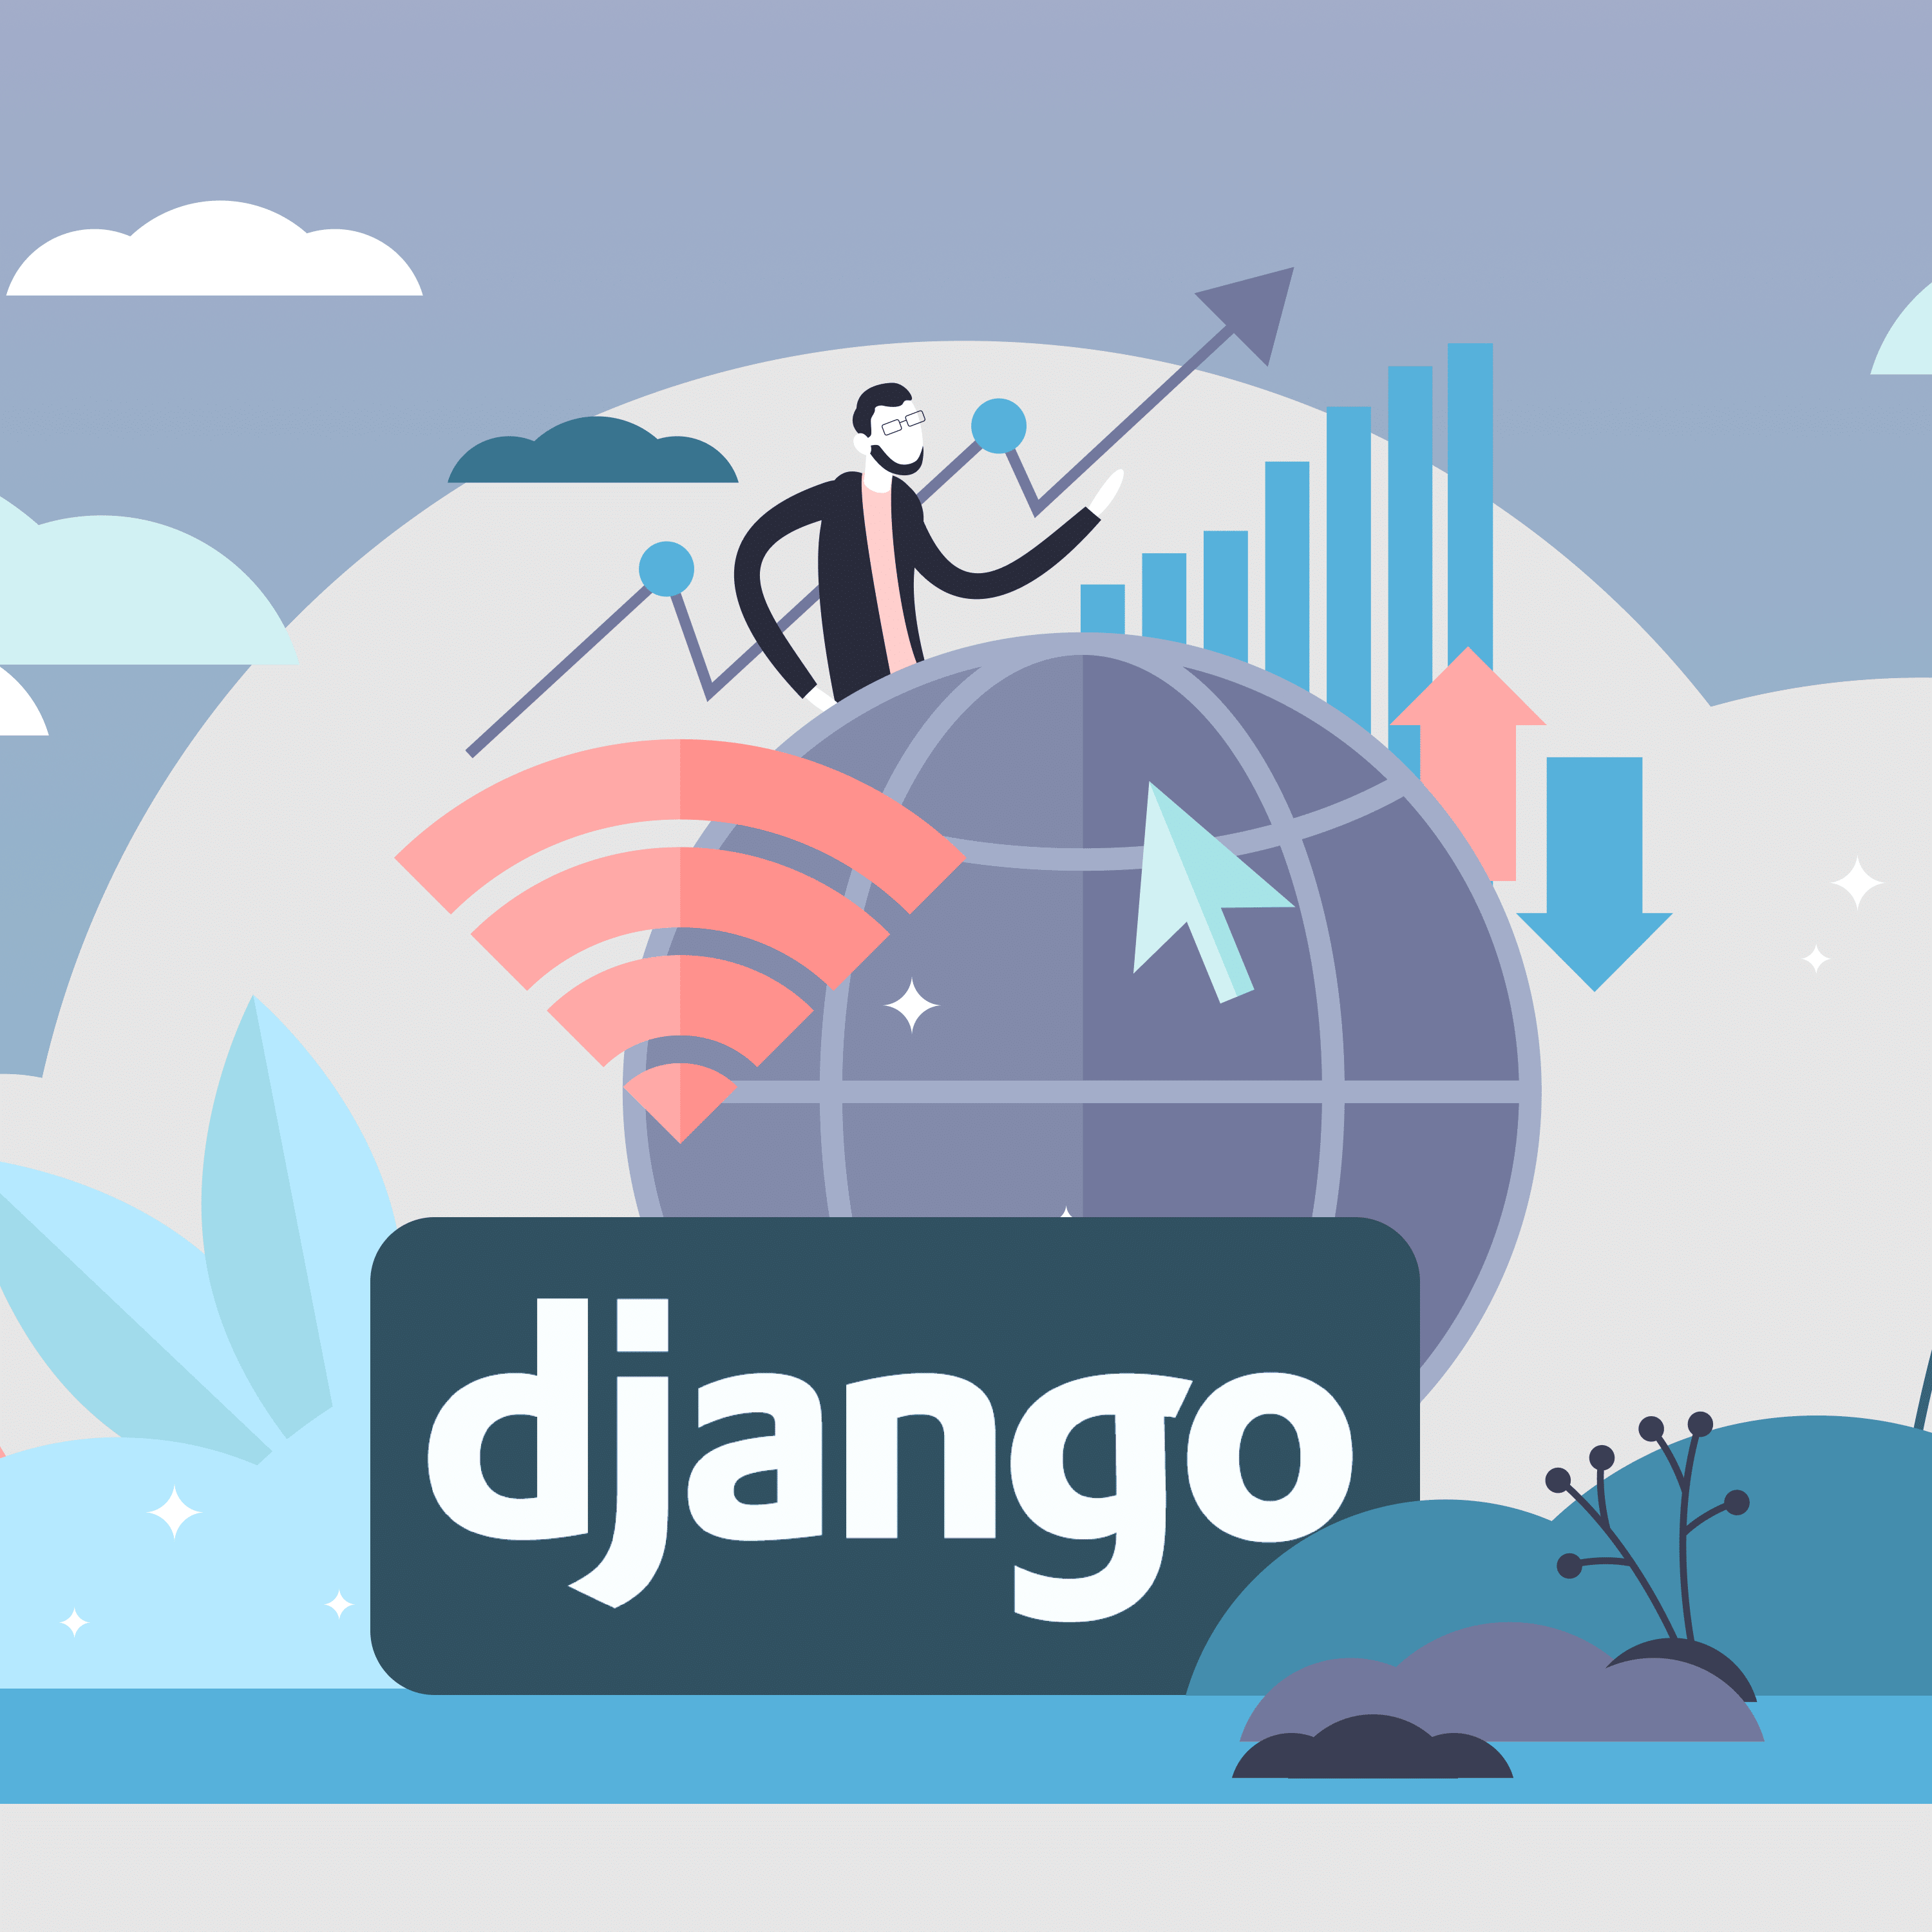 What tasks we solve with Django, a Python web framework